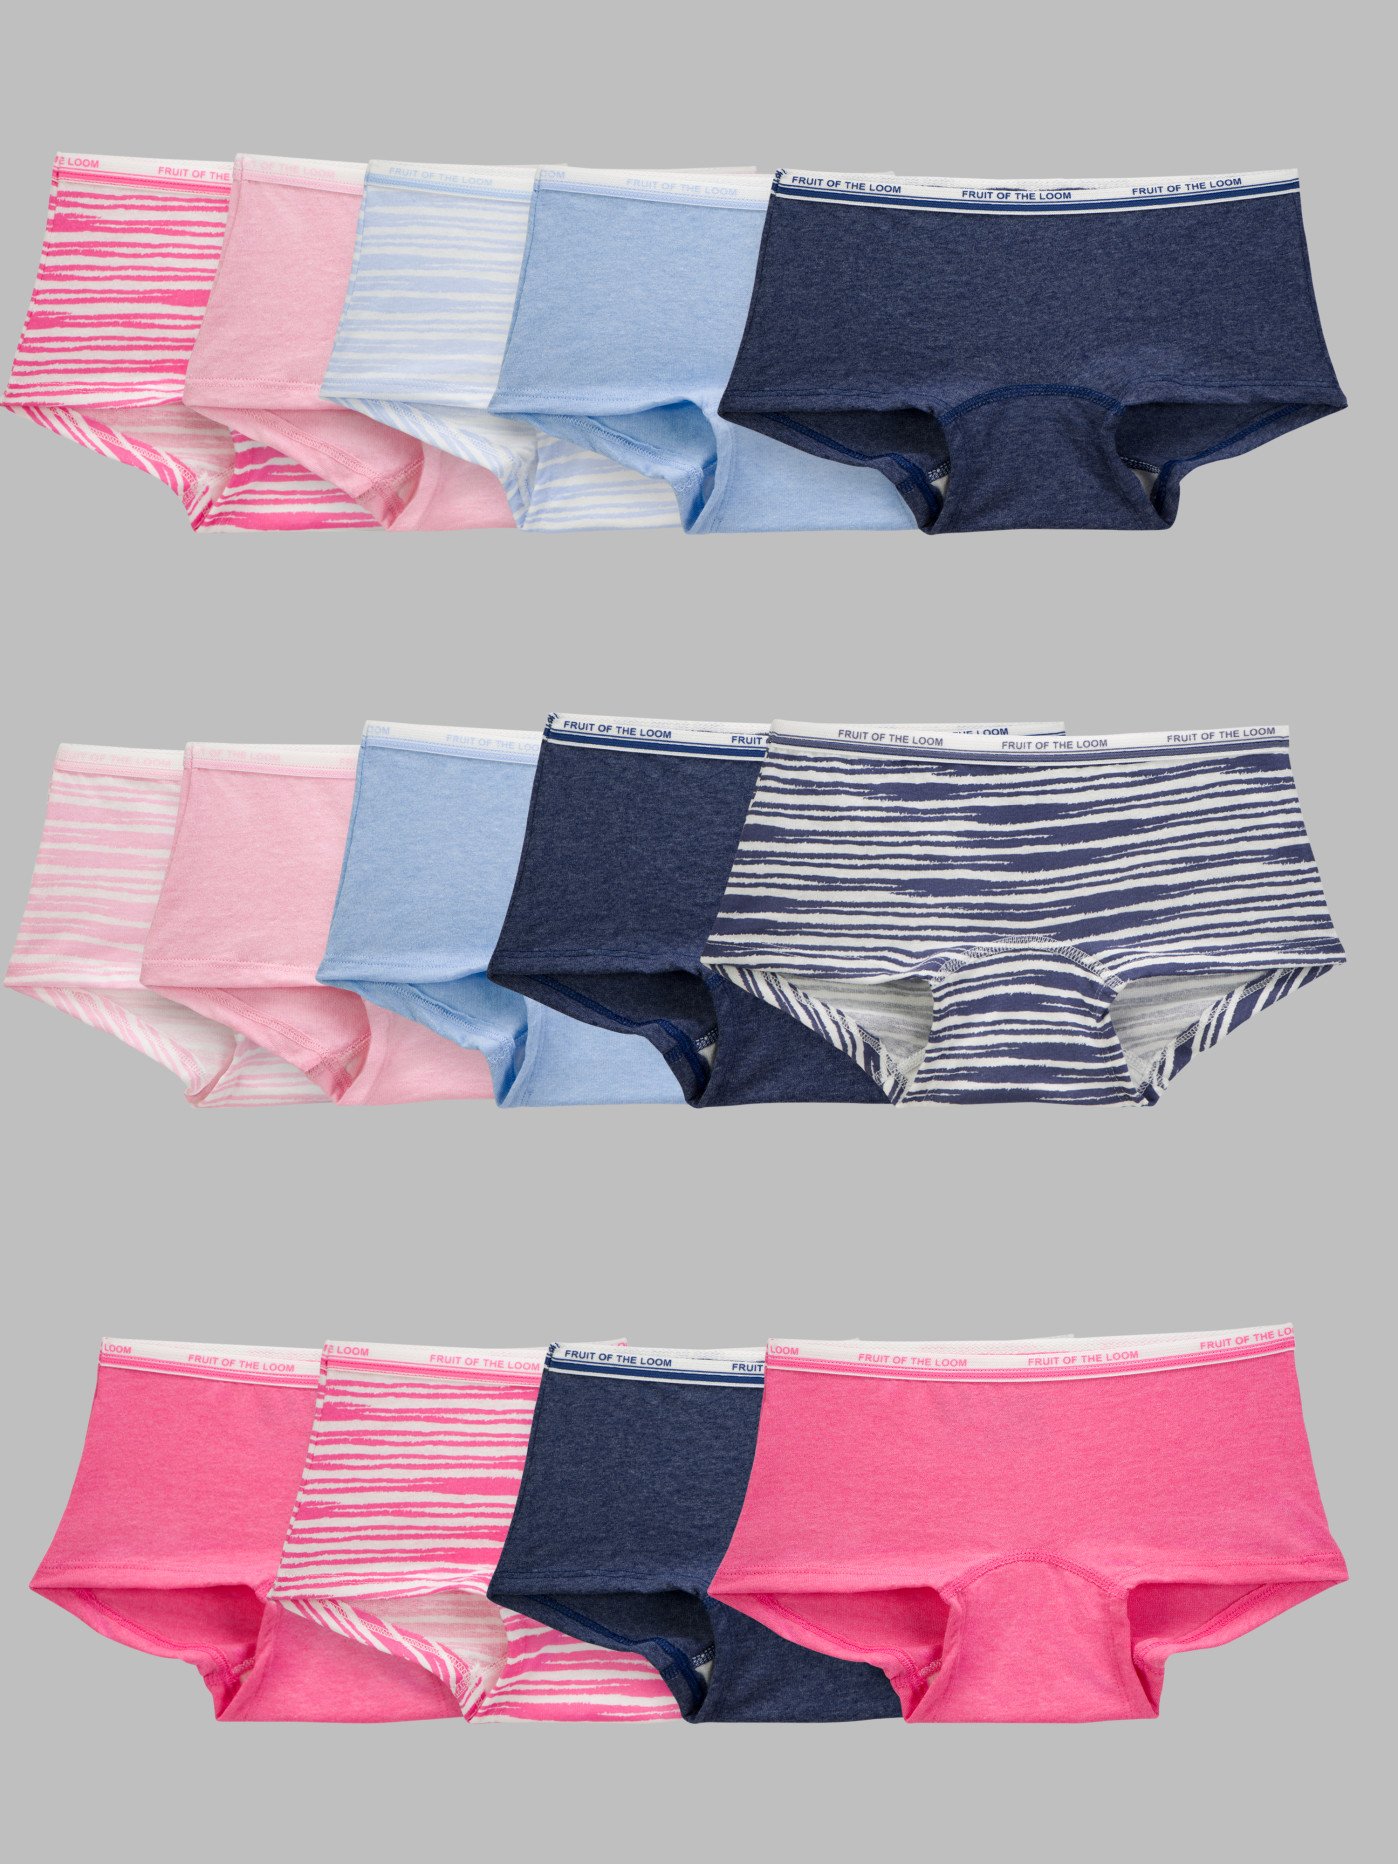 Women's 100% Cotton 5-Pack Boyshort Panties Underwear Size 7 or 8